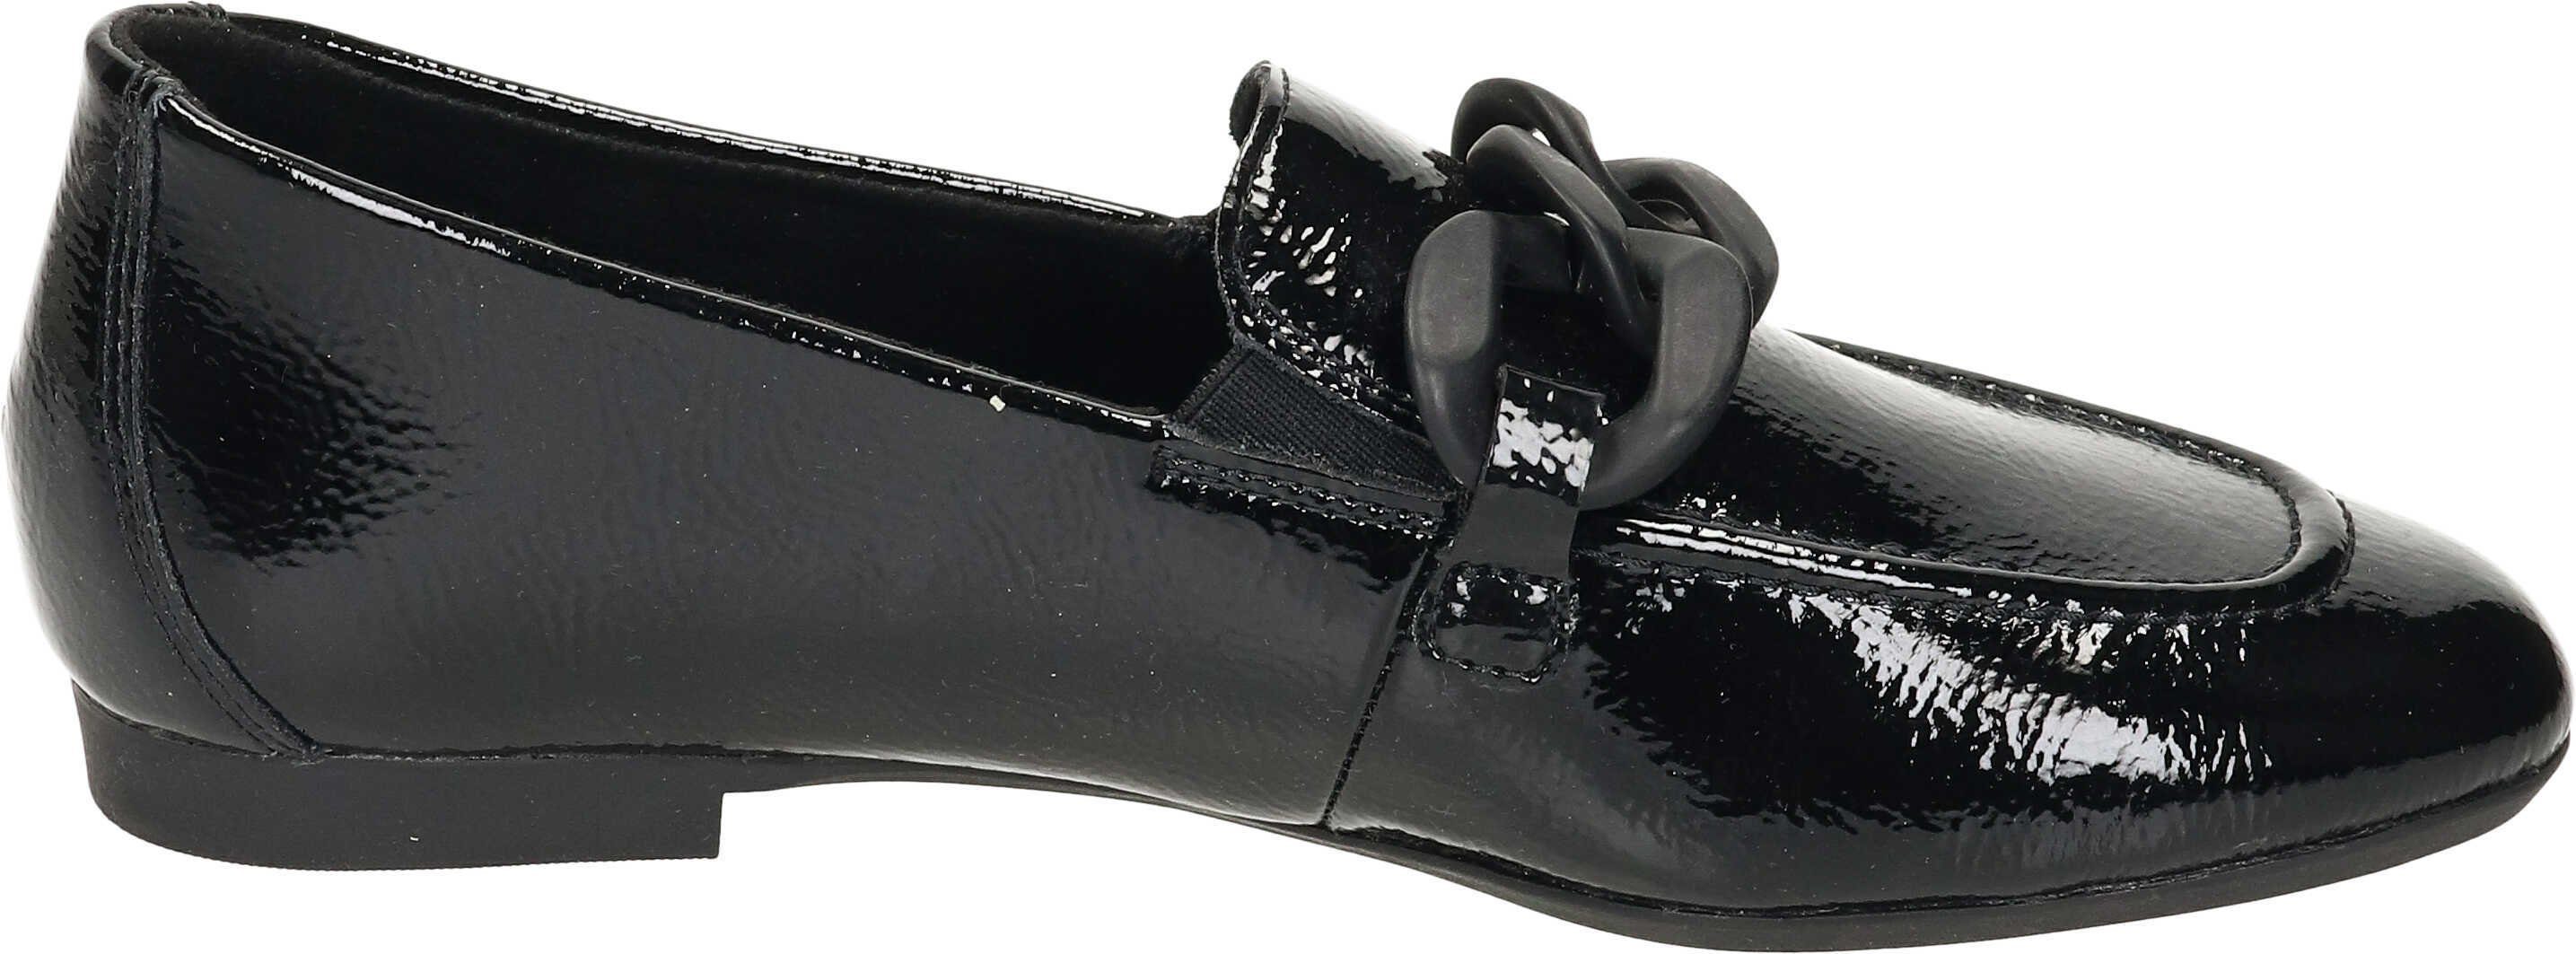 Remonte Slipper Loafer aus Lackleder schwarz